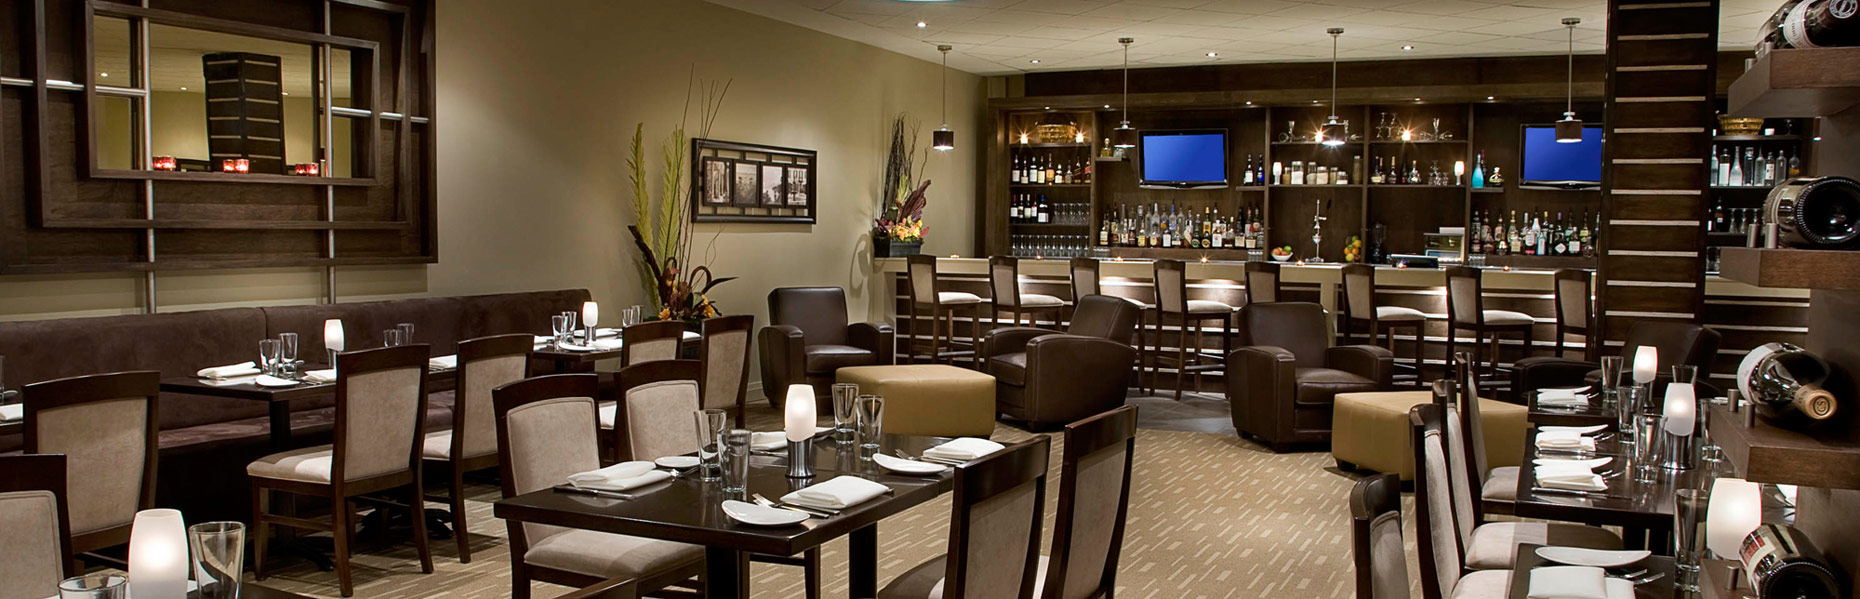 Hospitality-Hotel-Dining-Bar